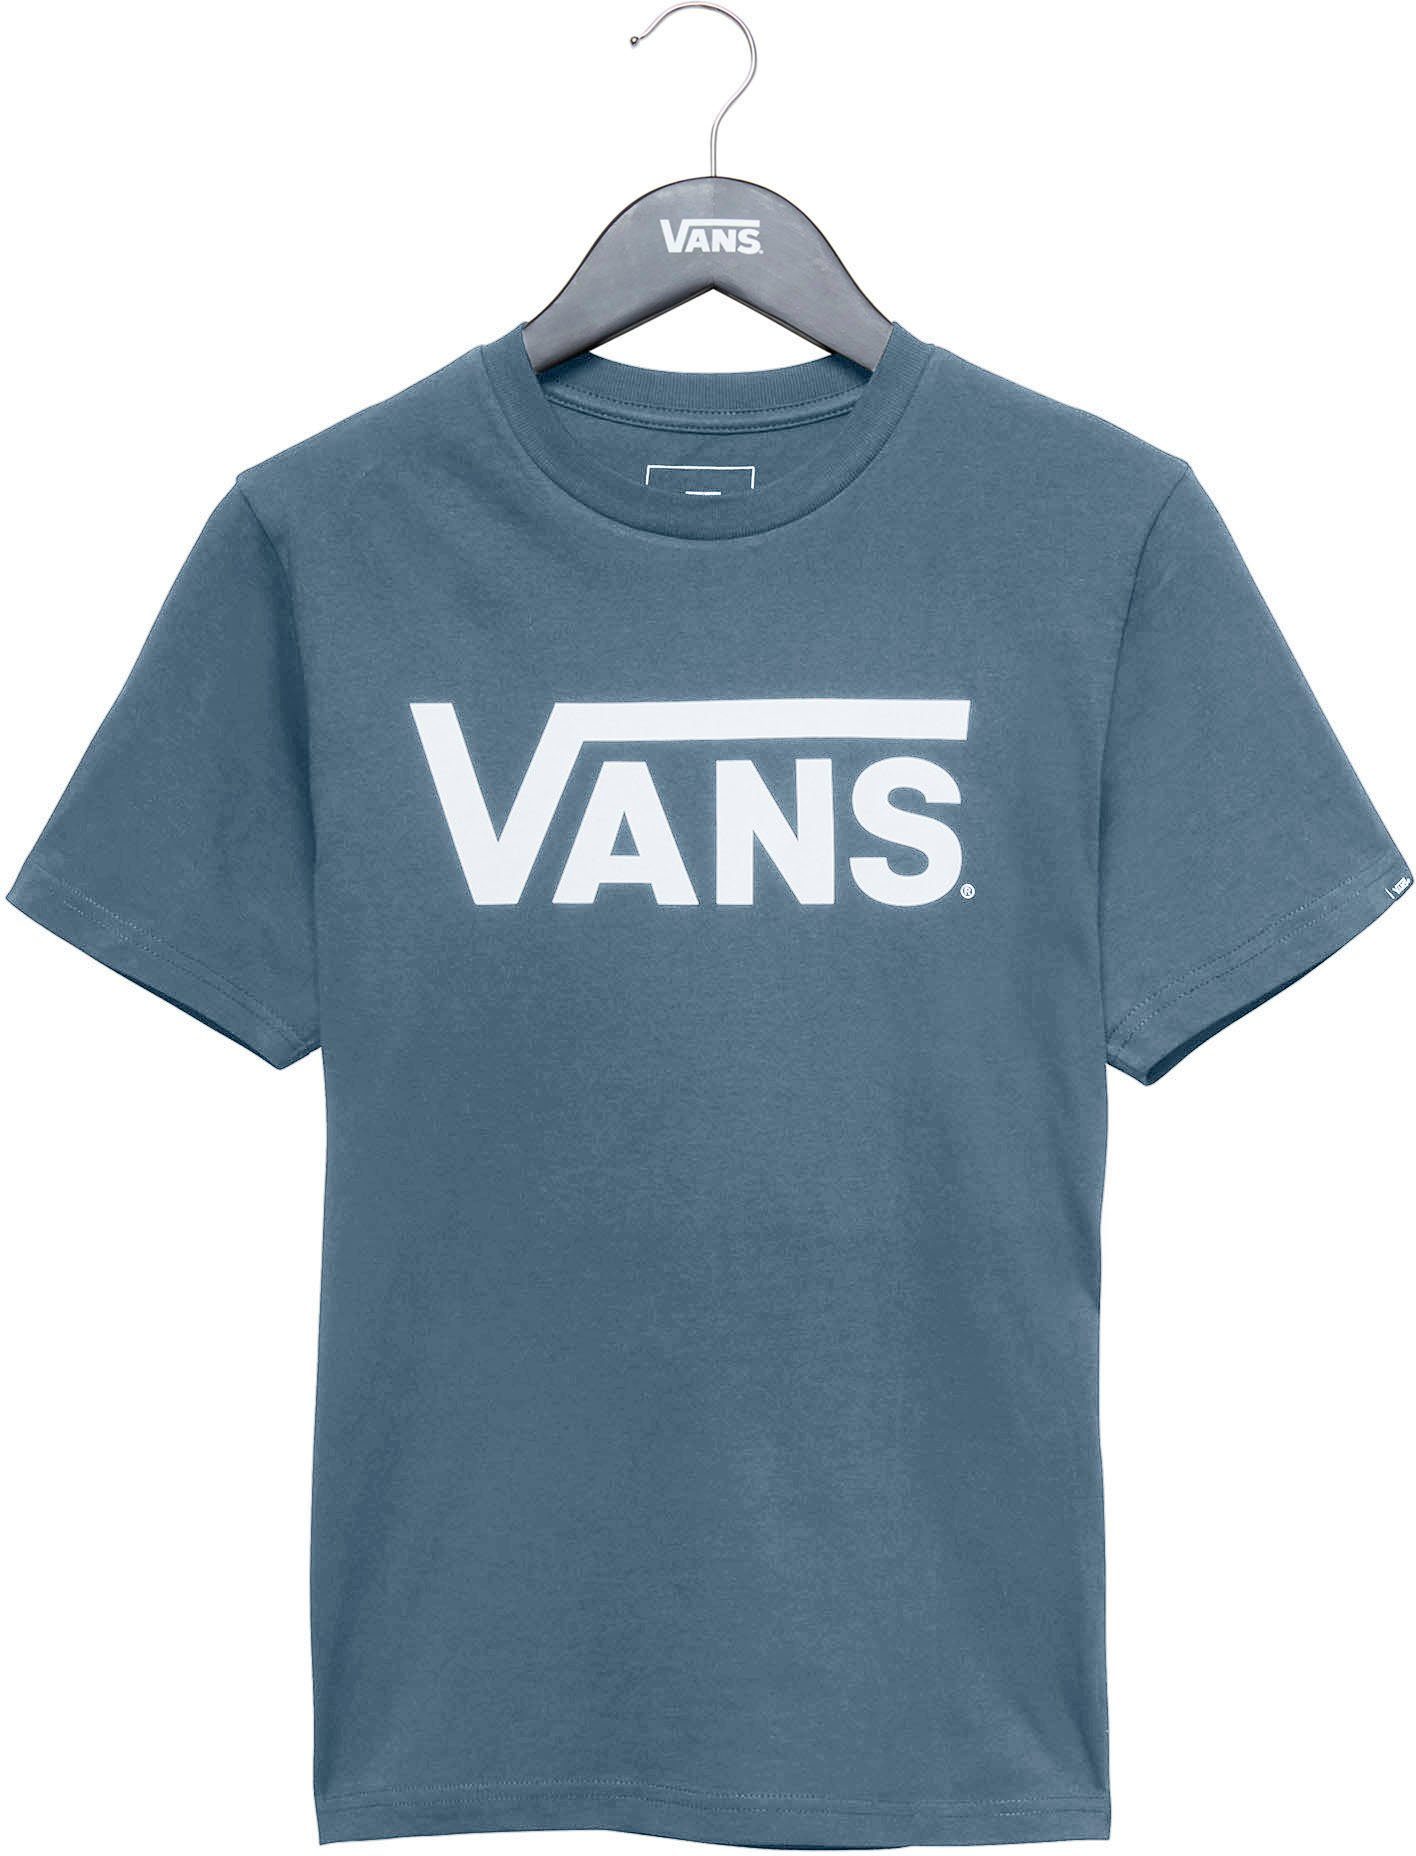 Vans CLASSIC VANS T-Shirt bluestone BOYS